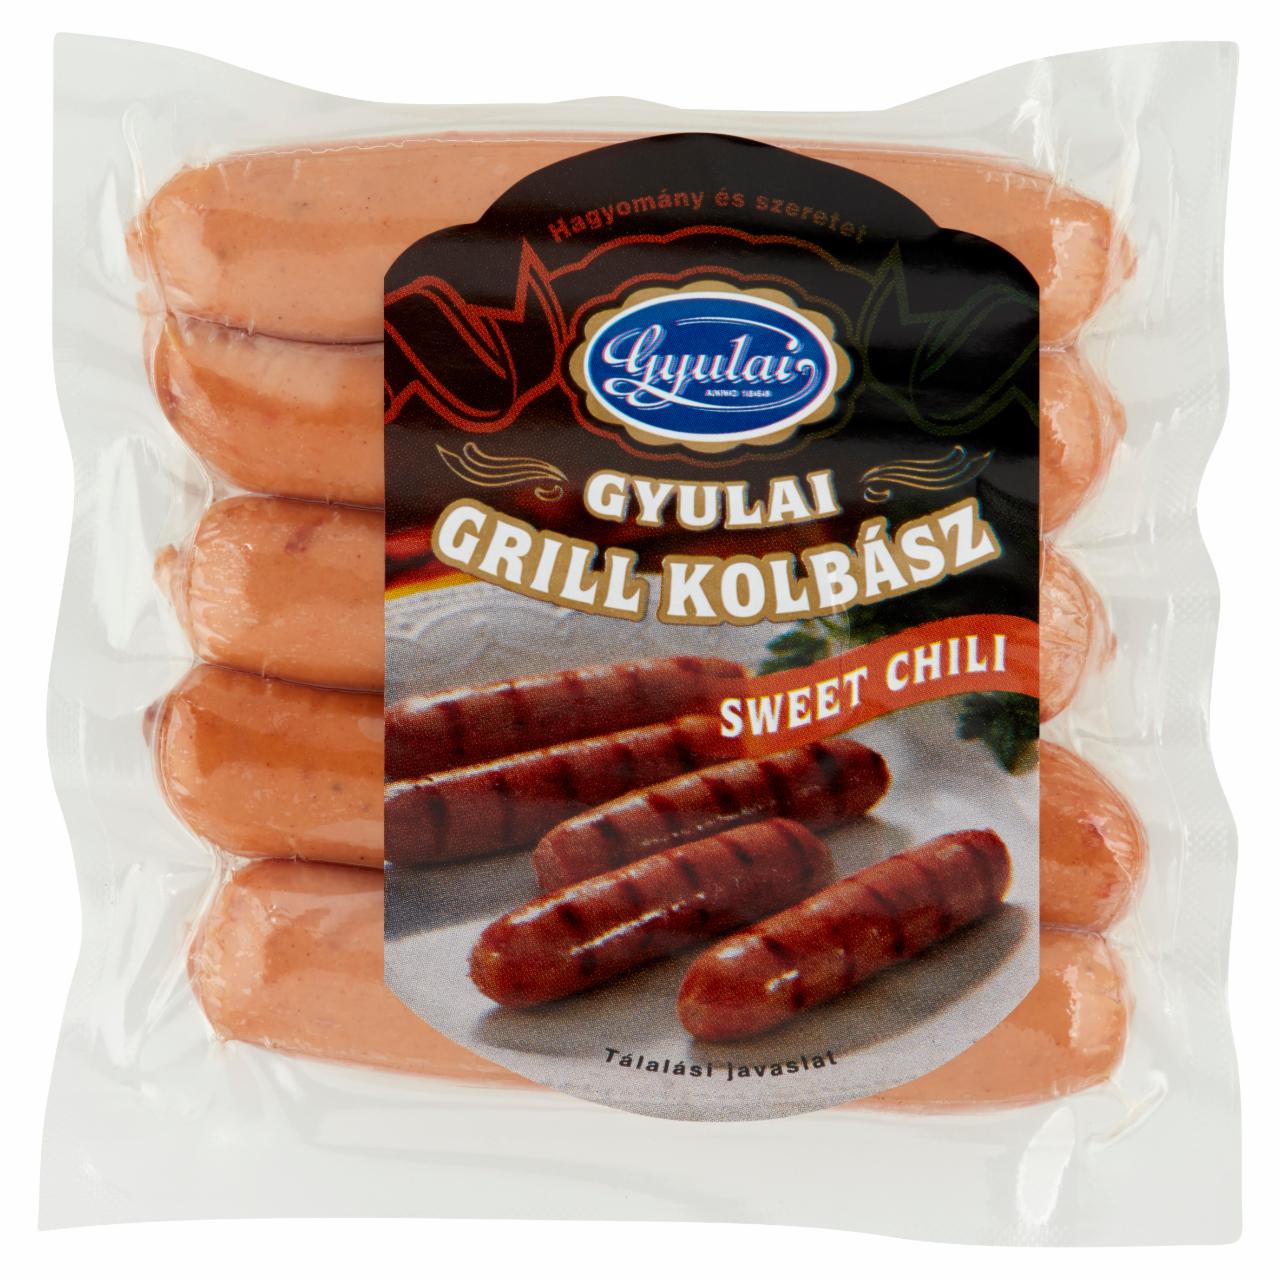 Képek - Gyulai sweet chili mini grillkolbász 150 g